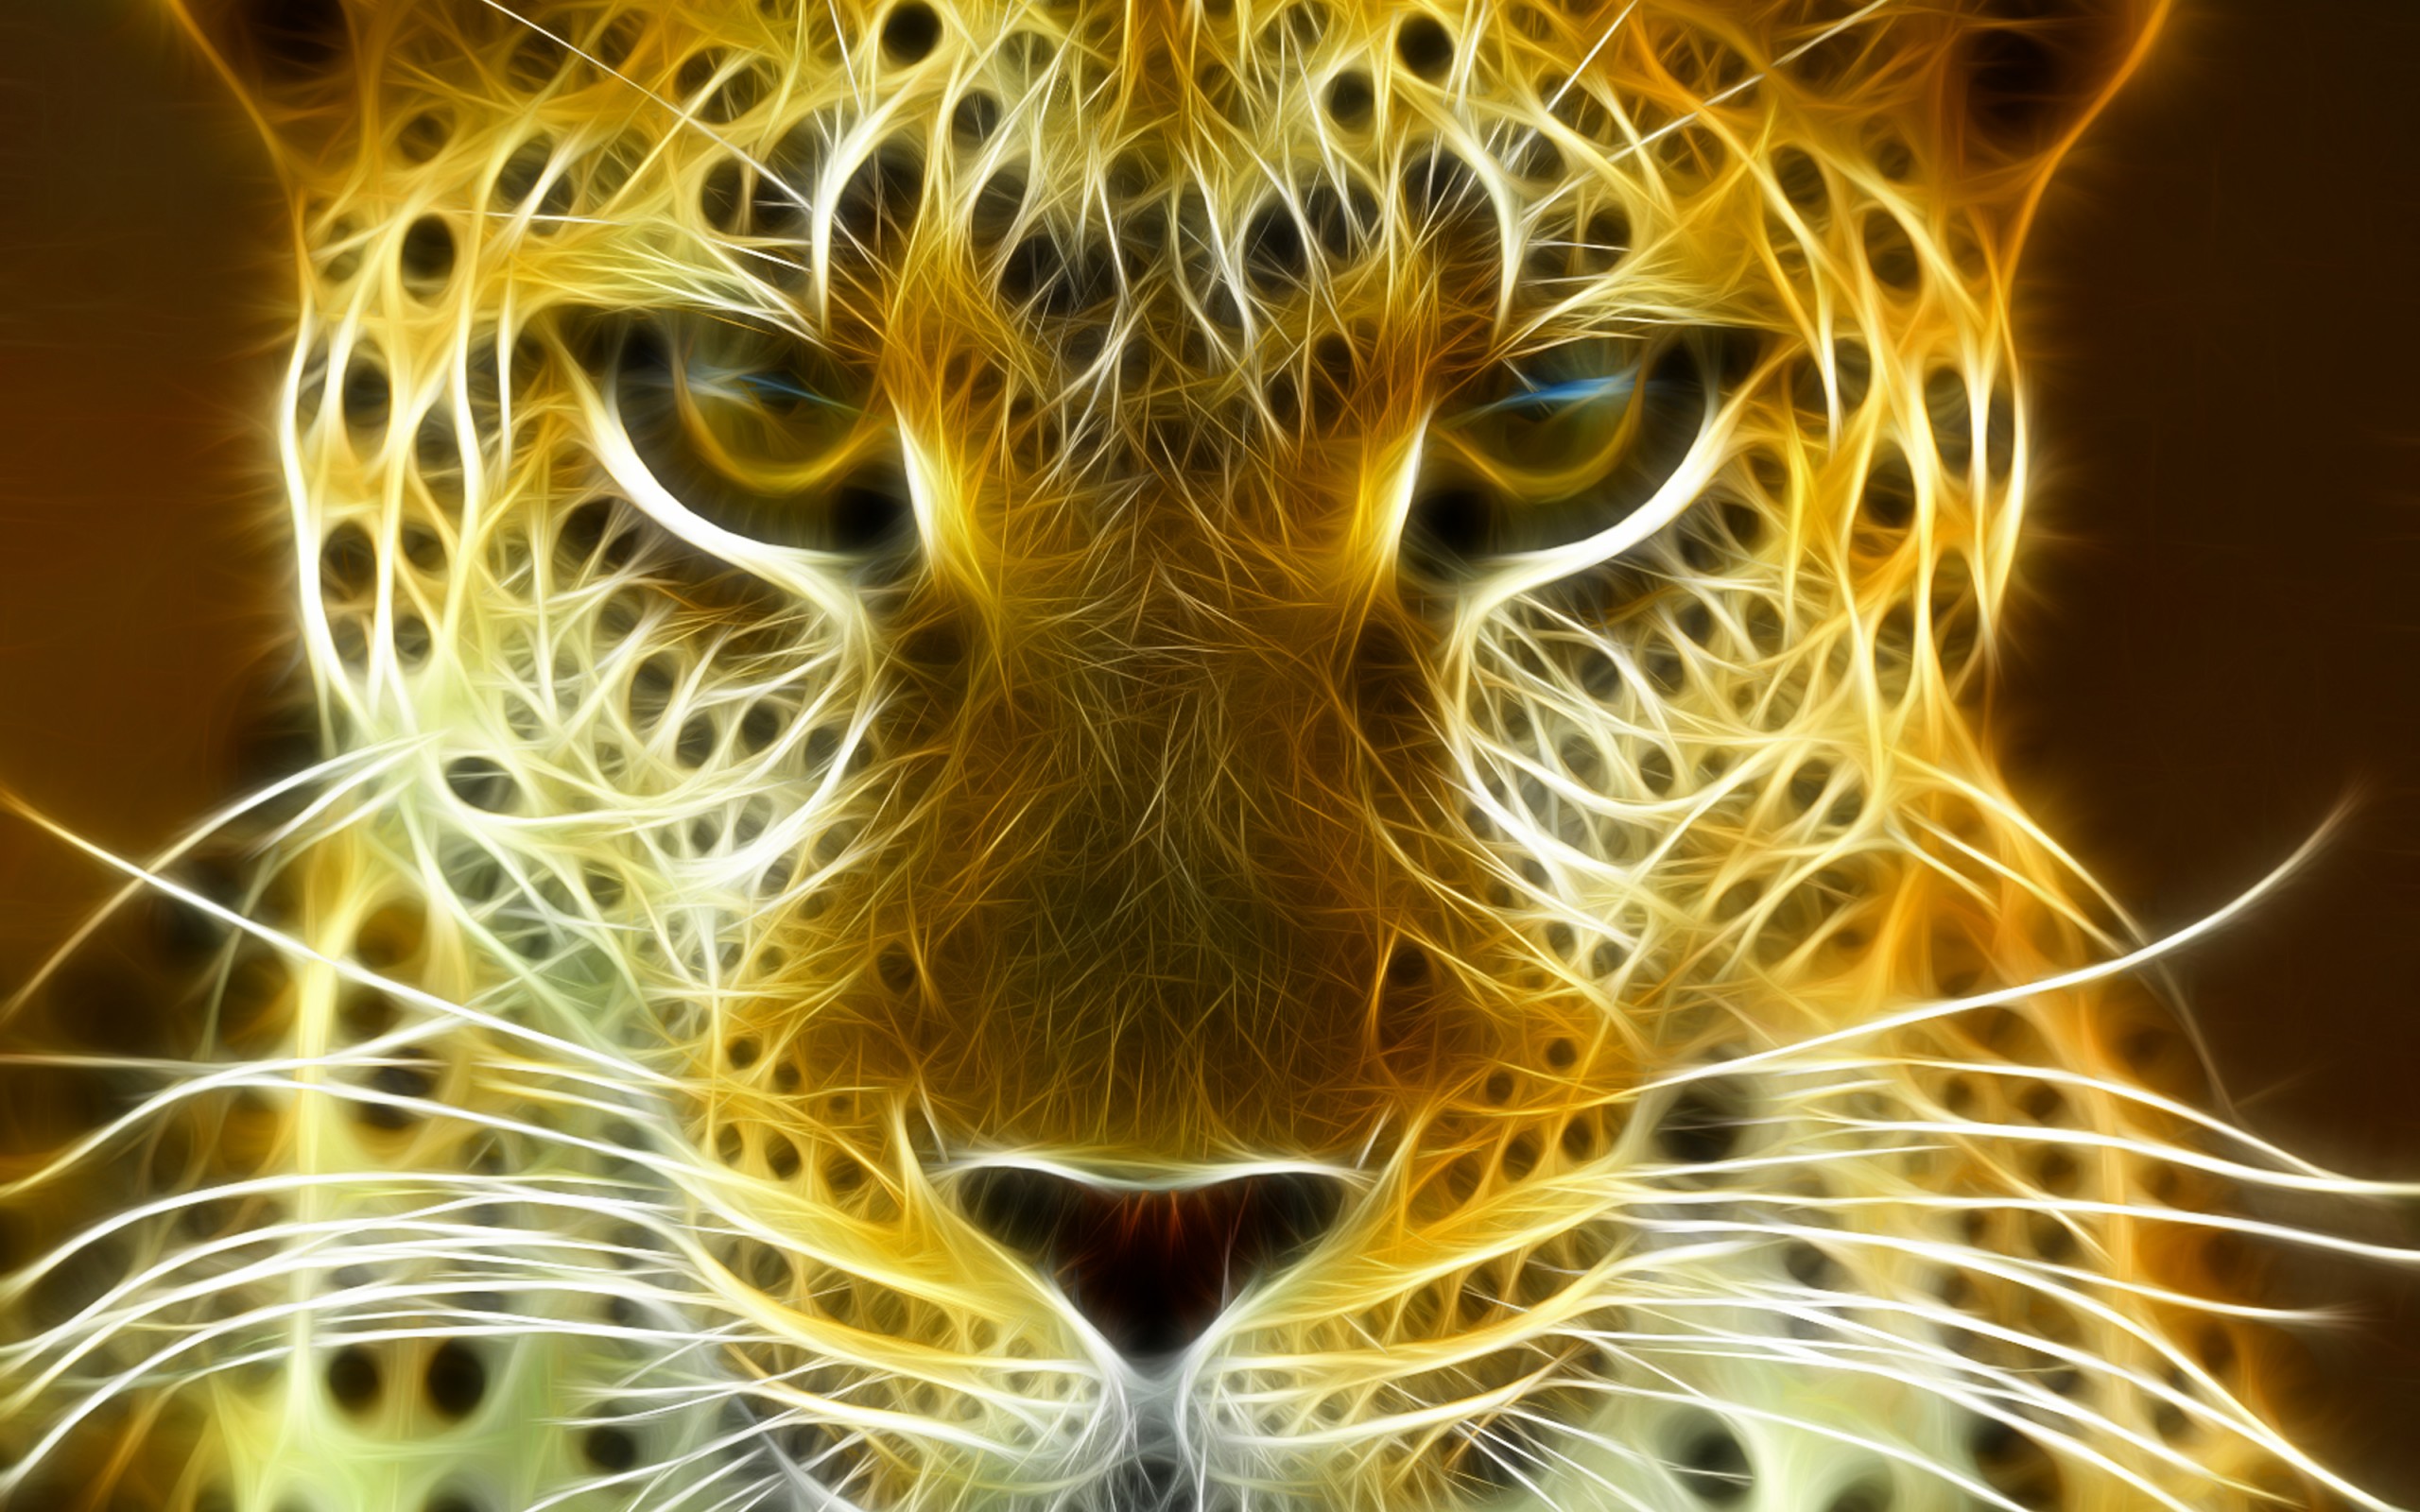 Neon Leopard